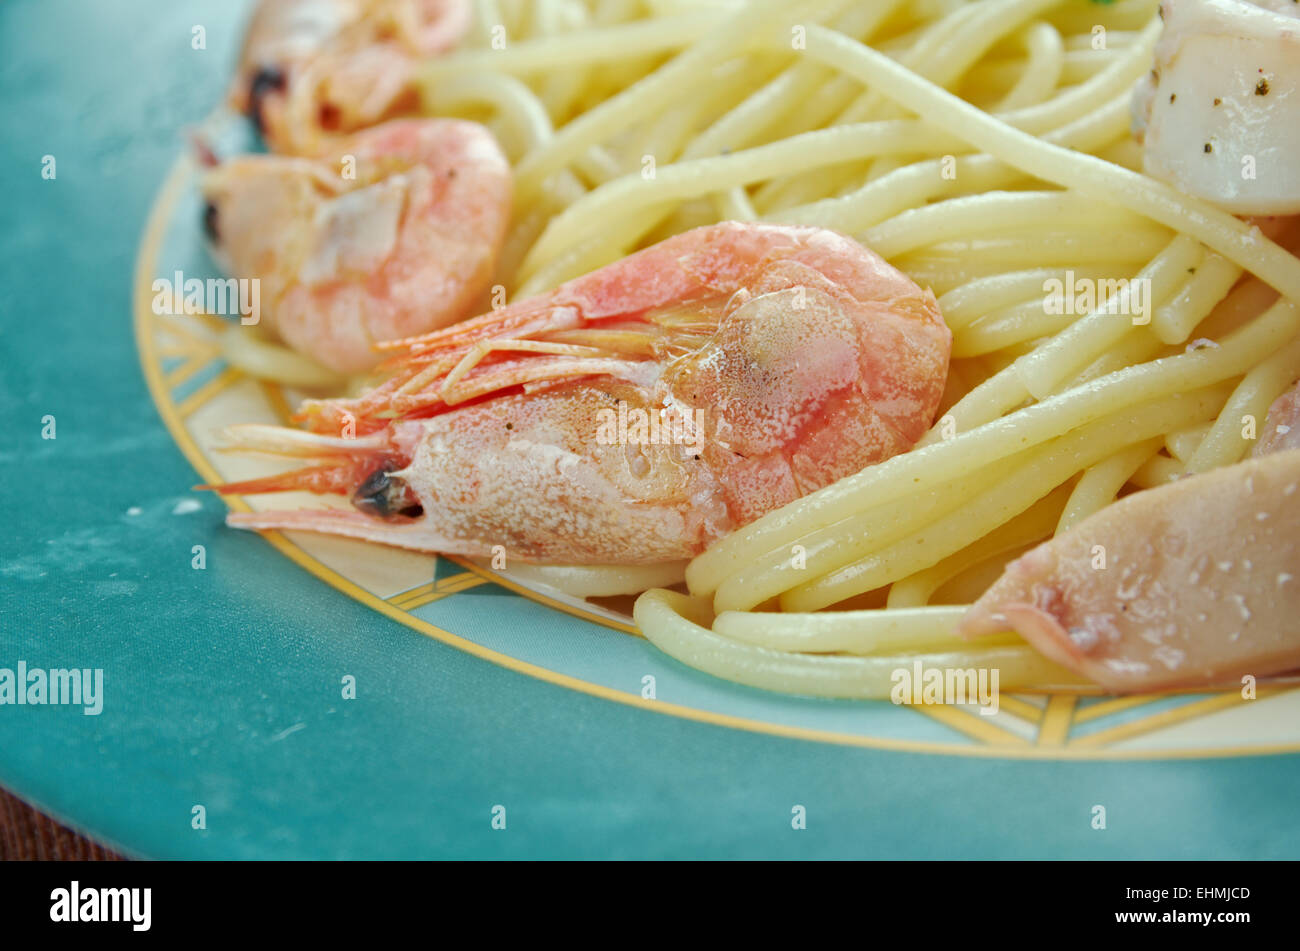 Spaghetti ai frutti di mare - italian pasta spaghetti with  seafood Stock Photo